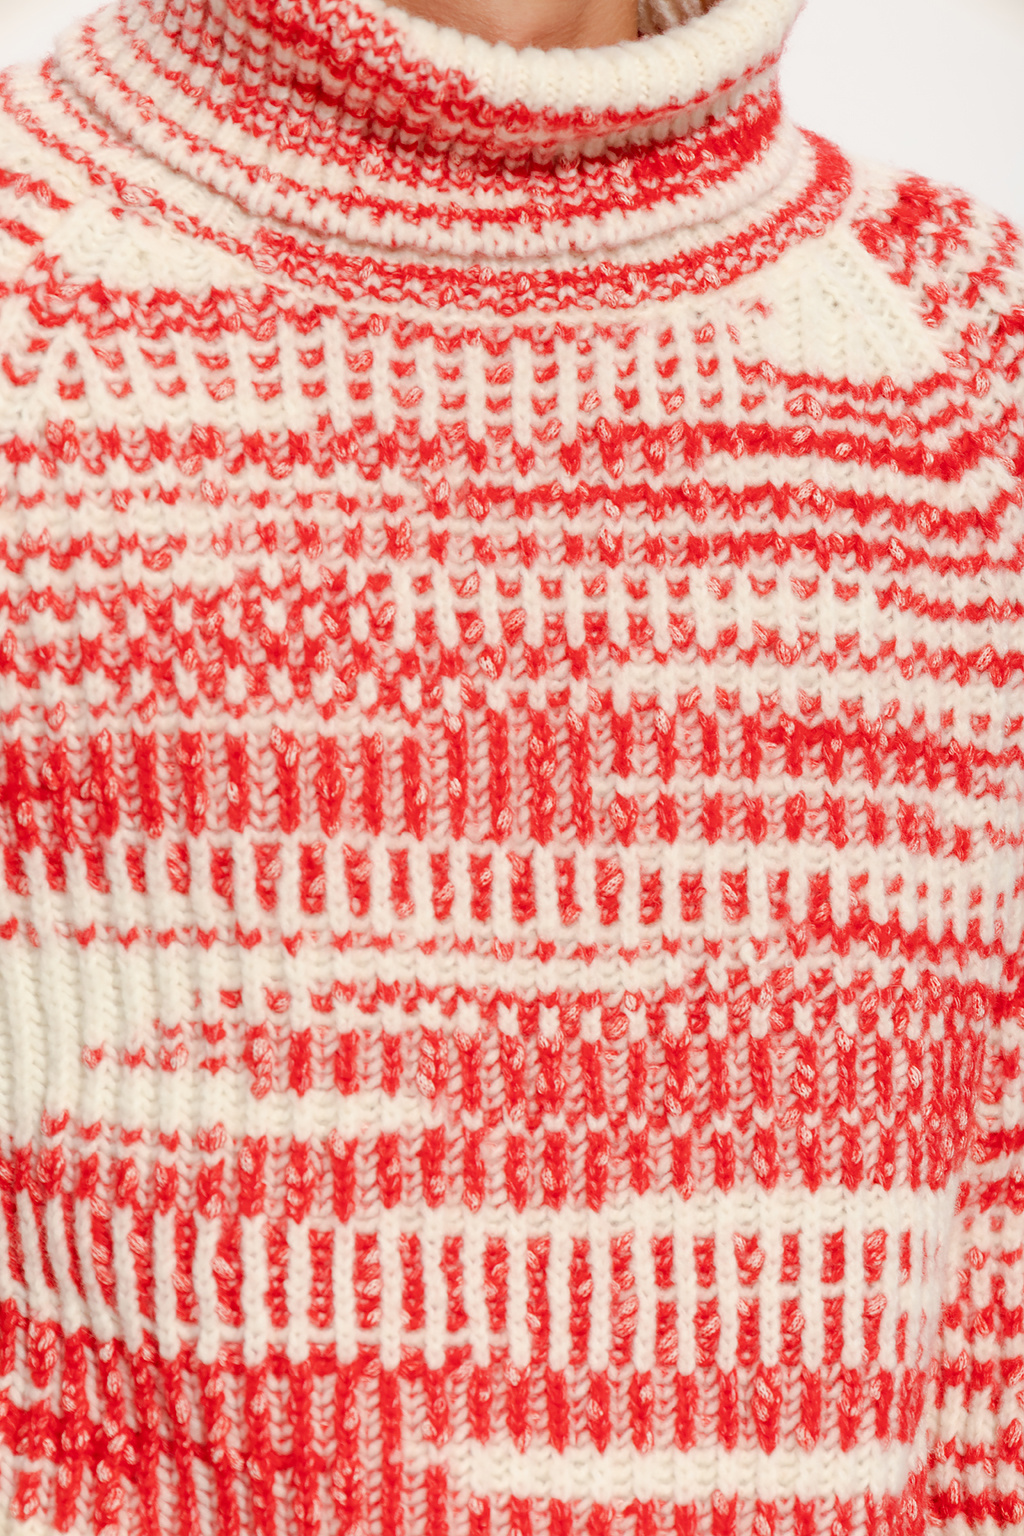 Salvatore Ferragamo Patterned turtleneck sweater